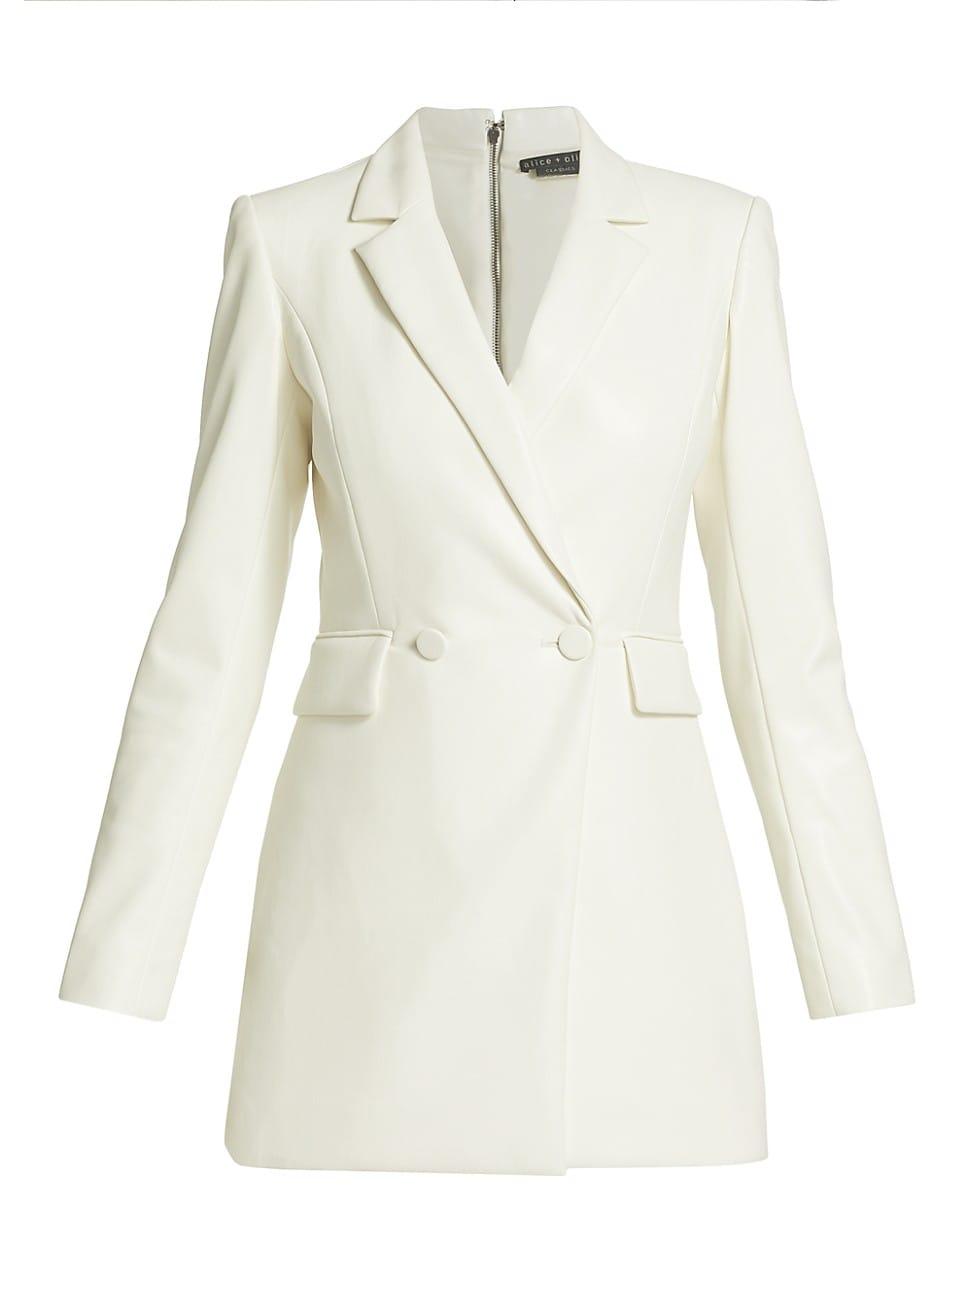 Alice + Olivia Kyrie Faux Leather Blazer Dress in White | Lyst